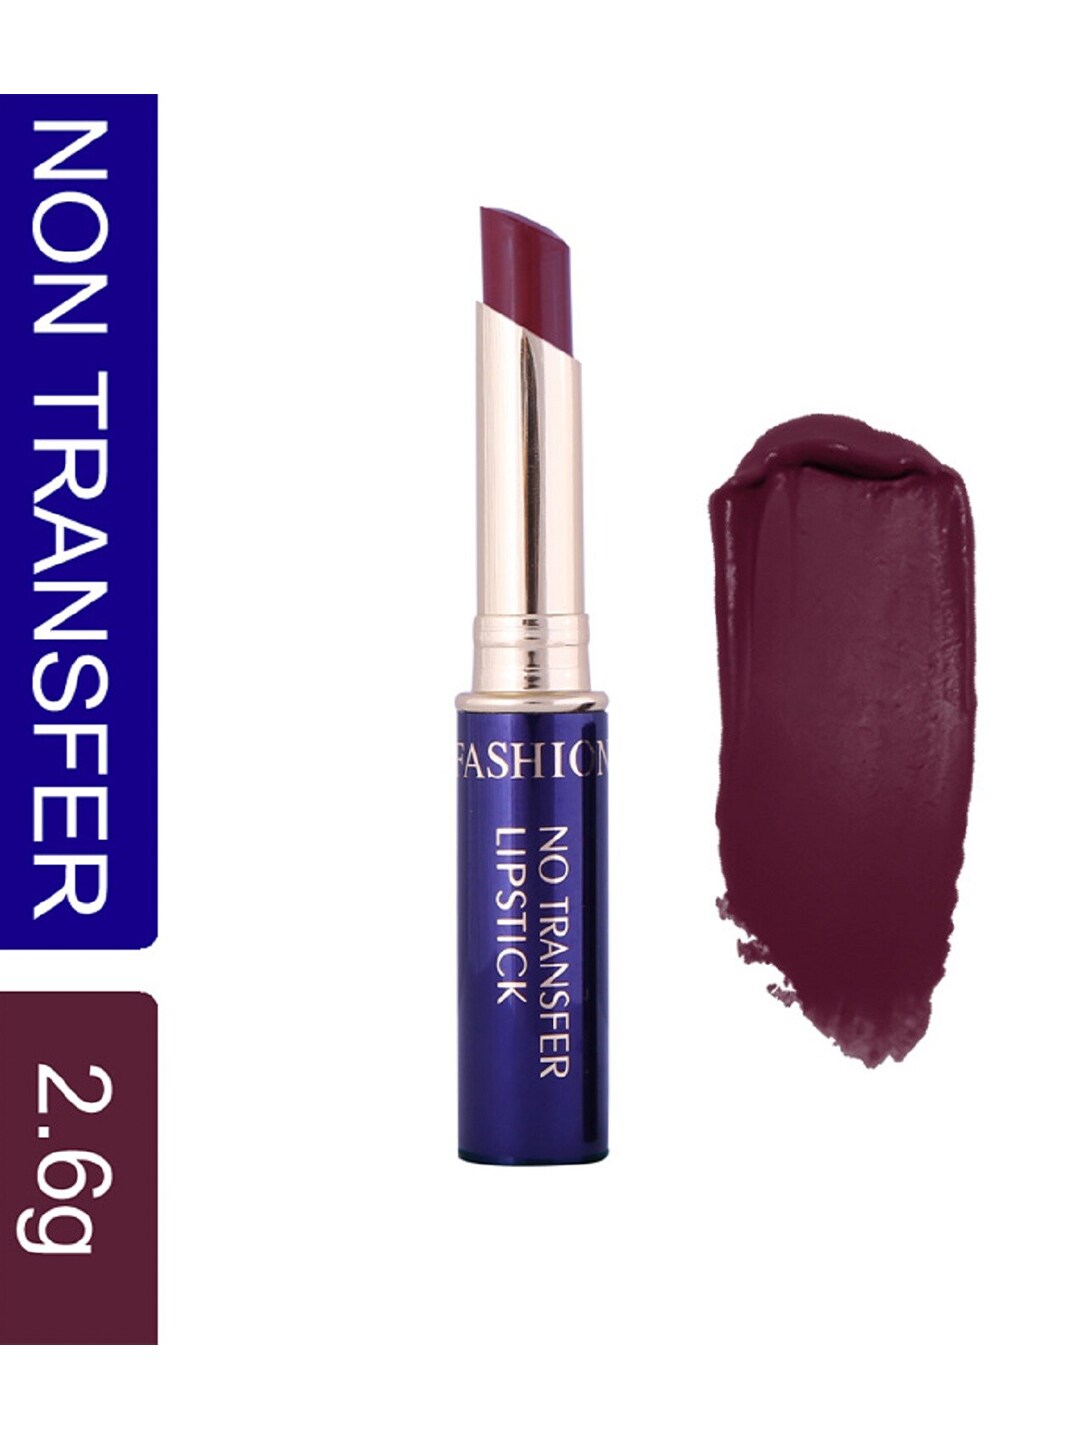 Fashion Colour No Transfer Matte Waterproof Lipstick 2.6 g - Dull Violet 40 Price in India